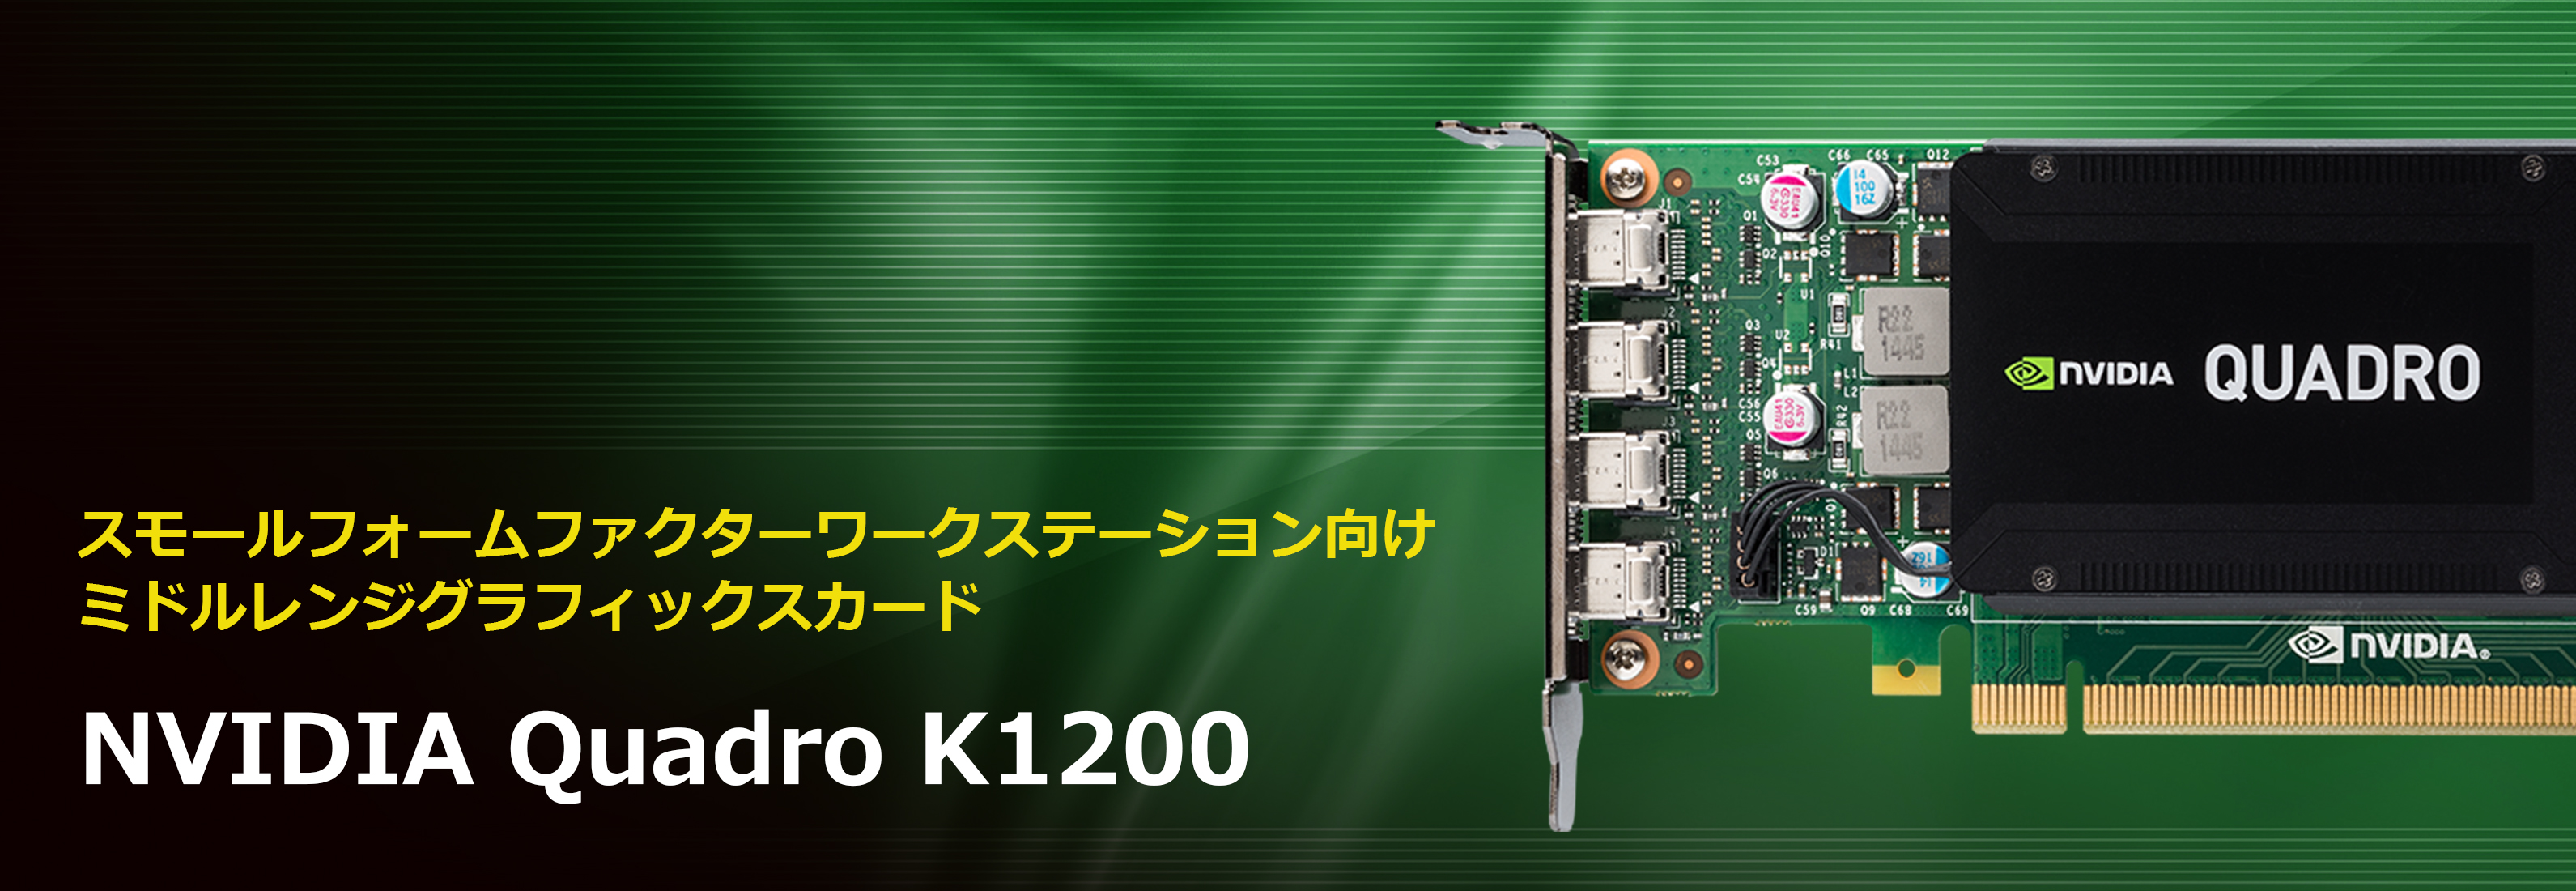 NVIDIA Quadro K1200 | 菱洋エレクトロ株式会社 - NVIDIA製品情報